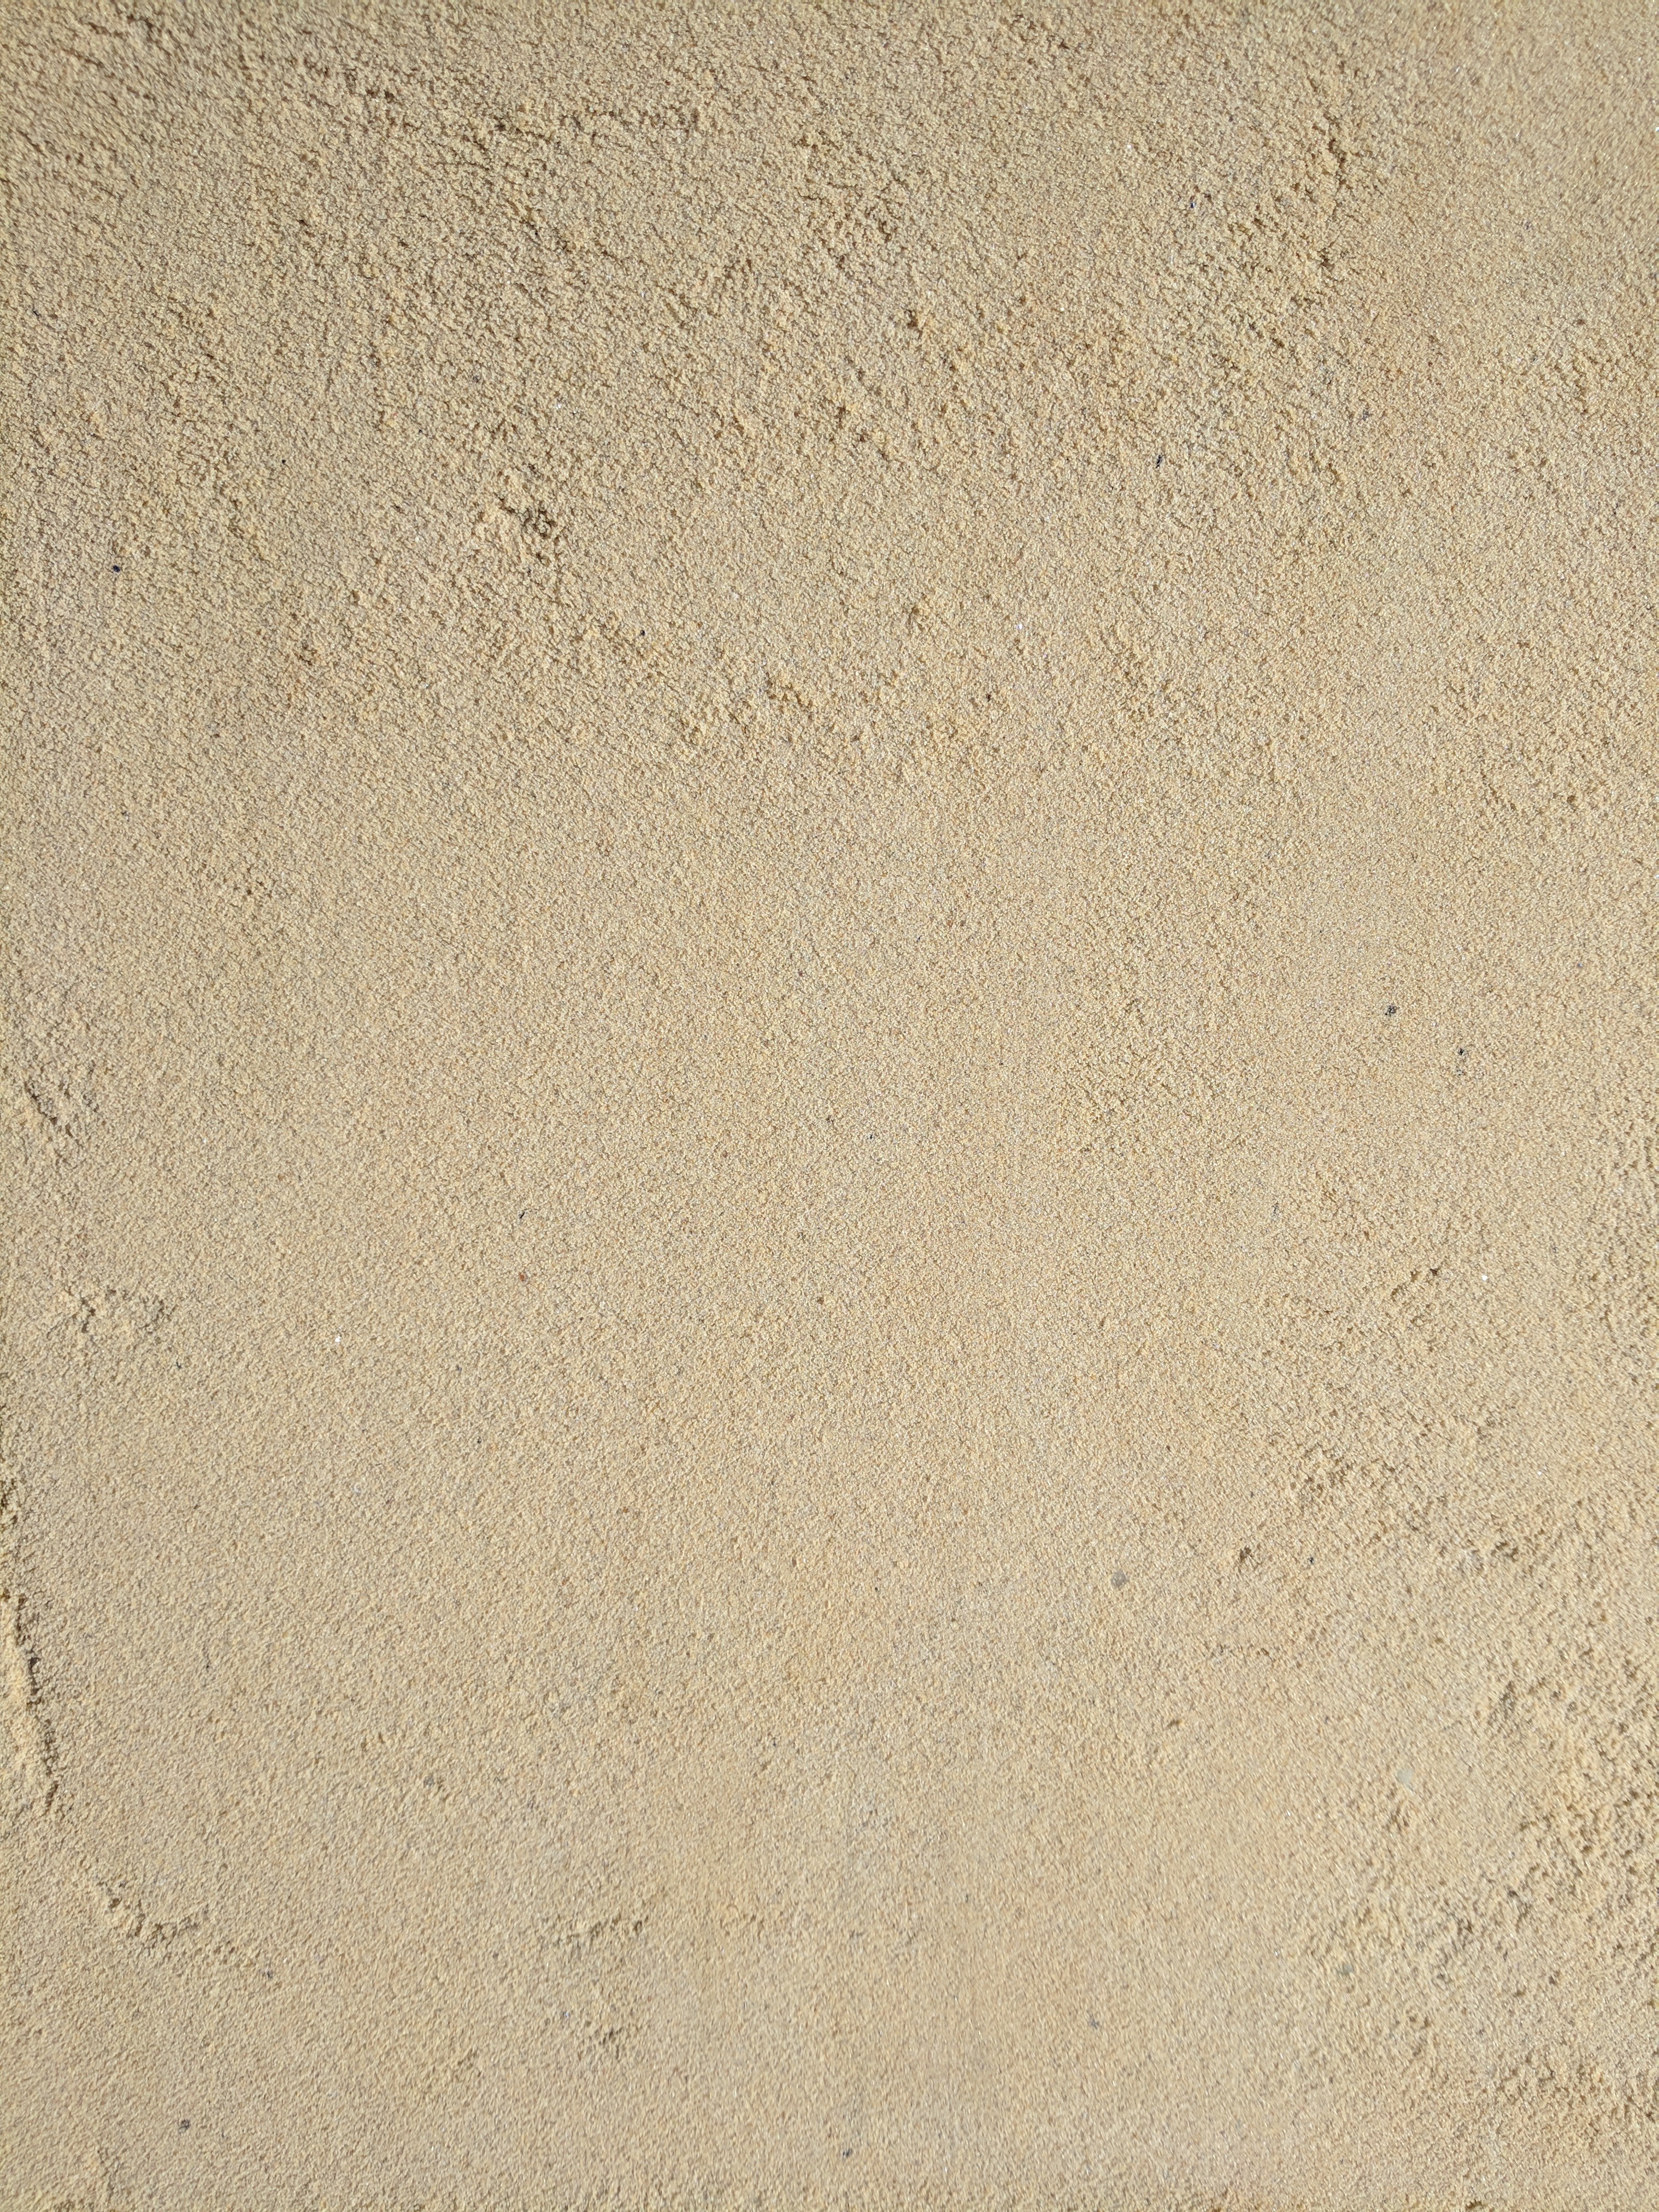 Fine Sand Dunrite Sand And Gravel Company